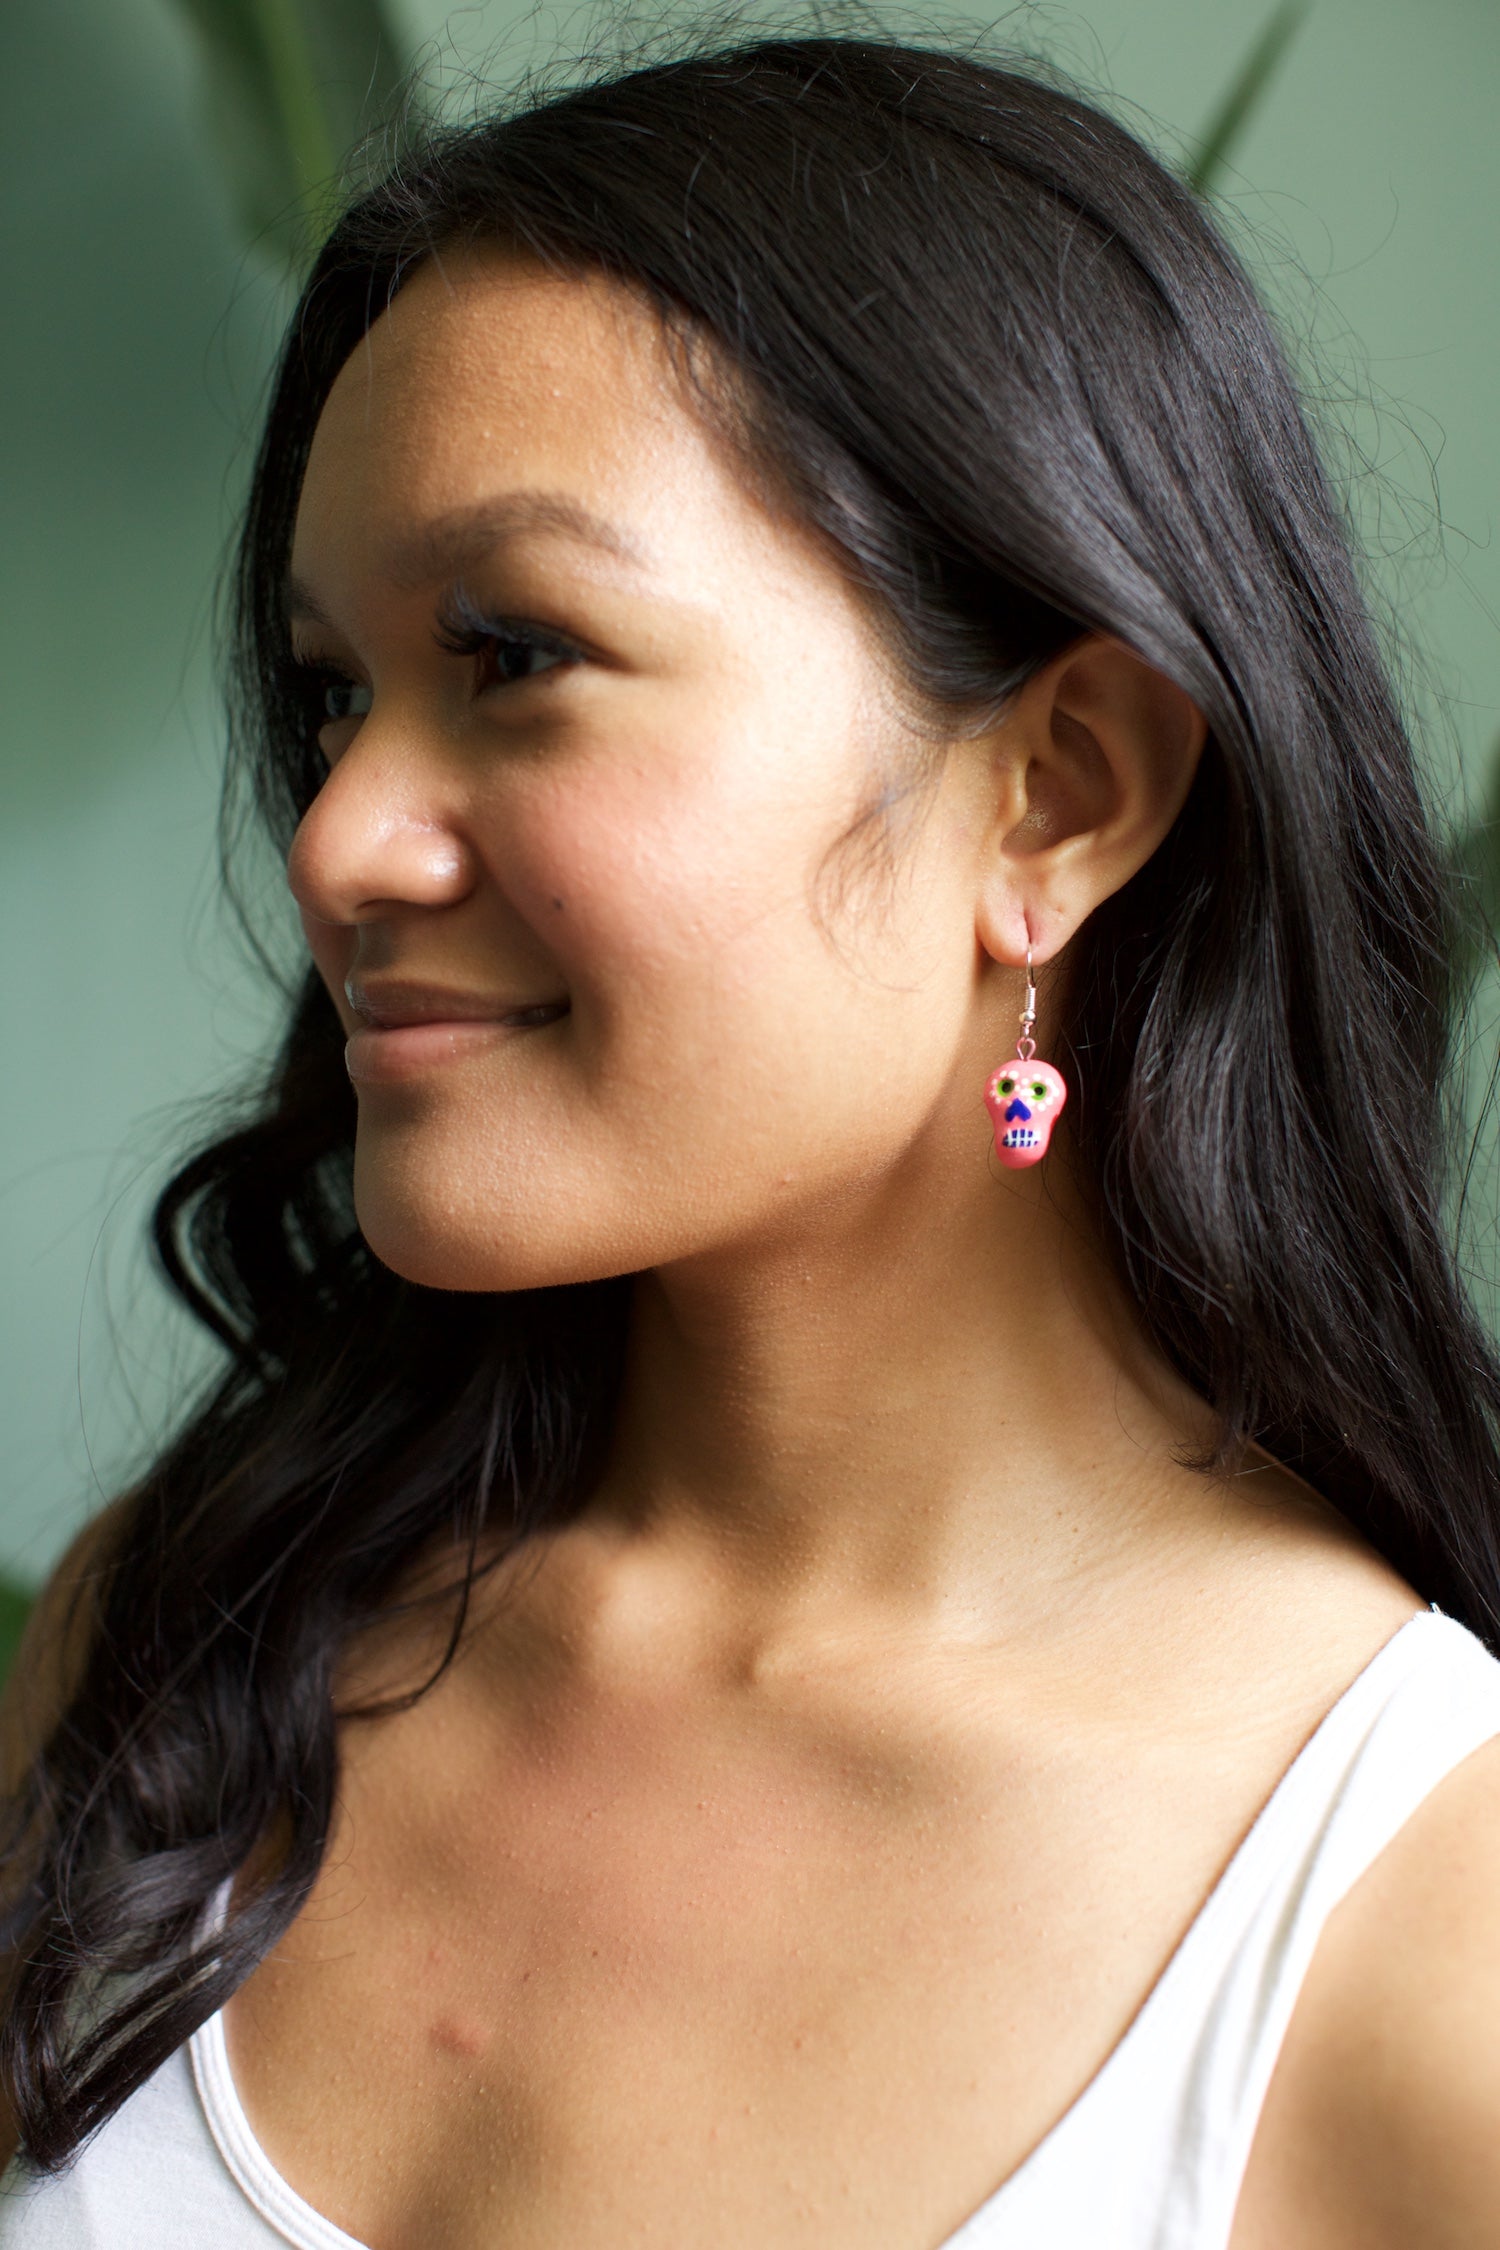 Lucia's World Emporium Fair Trade Handmade Ceramic Skeleton Earrings from Guatemala in Pink